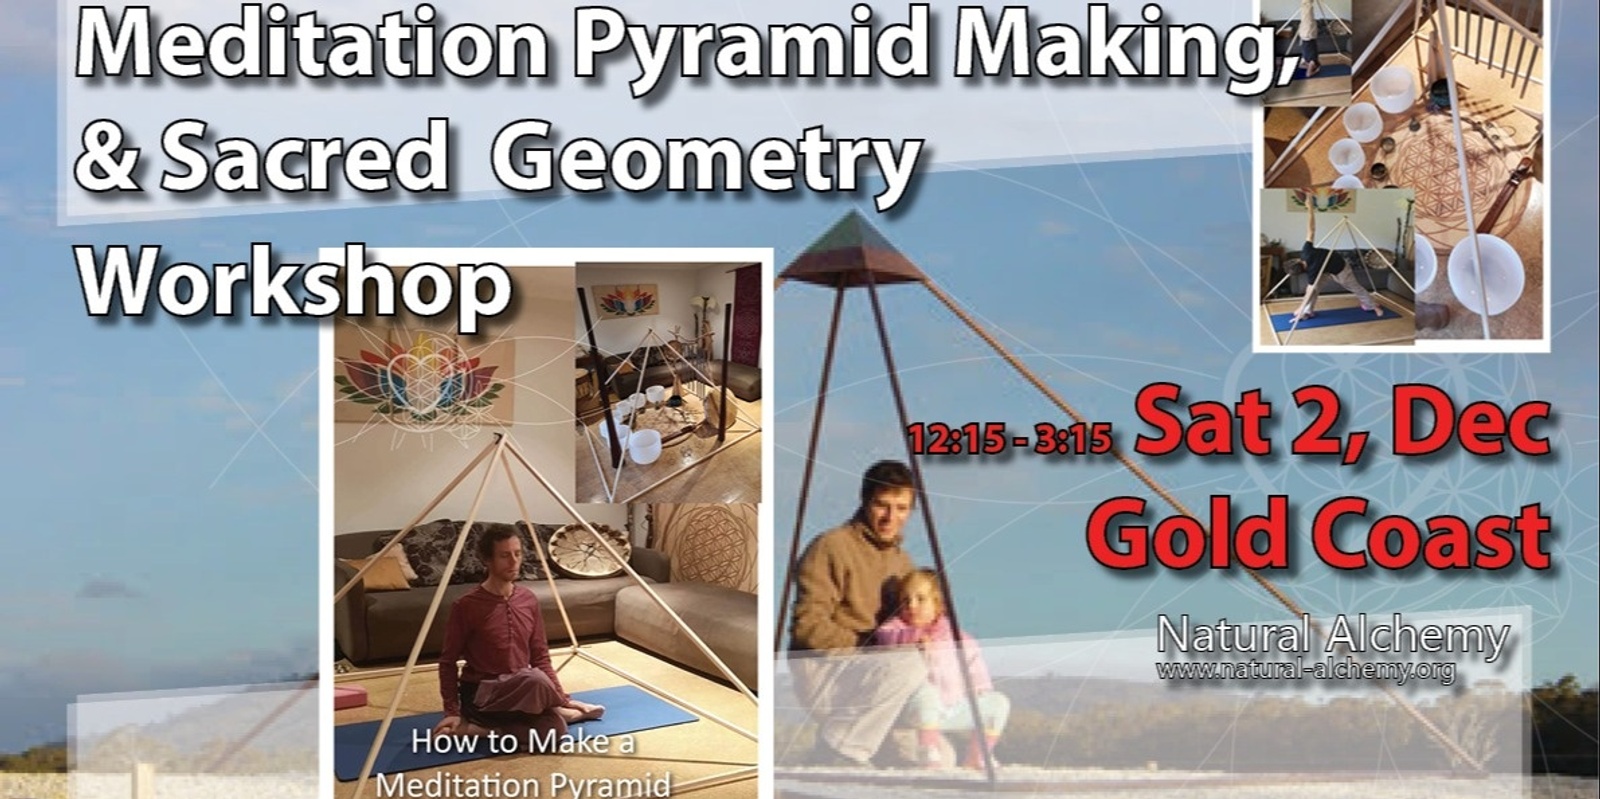 Banner image for Pyramid crafting, & sacred geometry workshop_GoldCoast